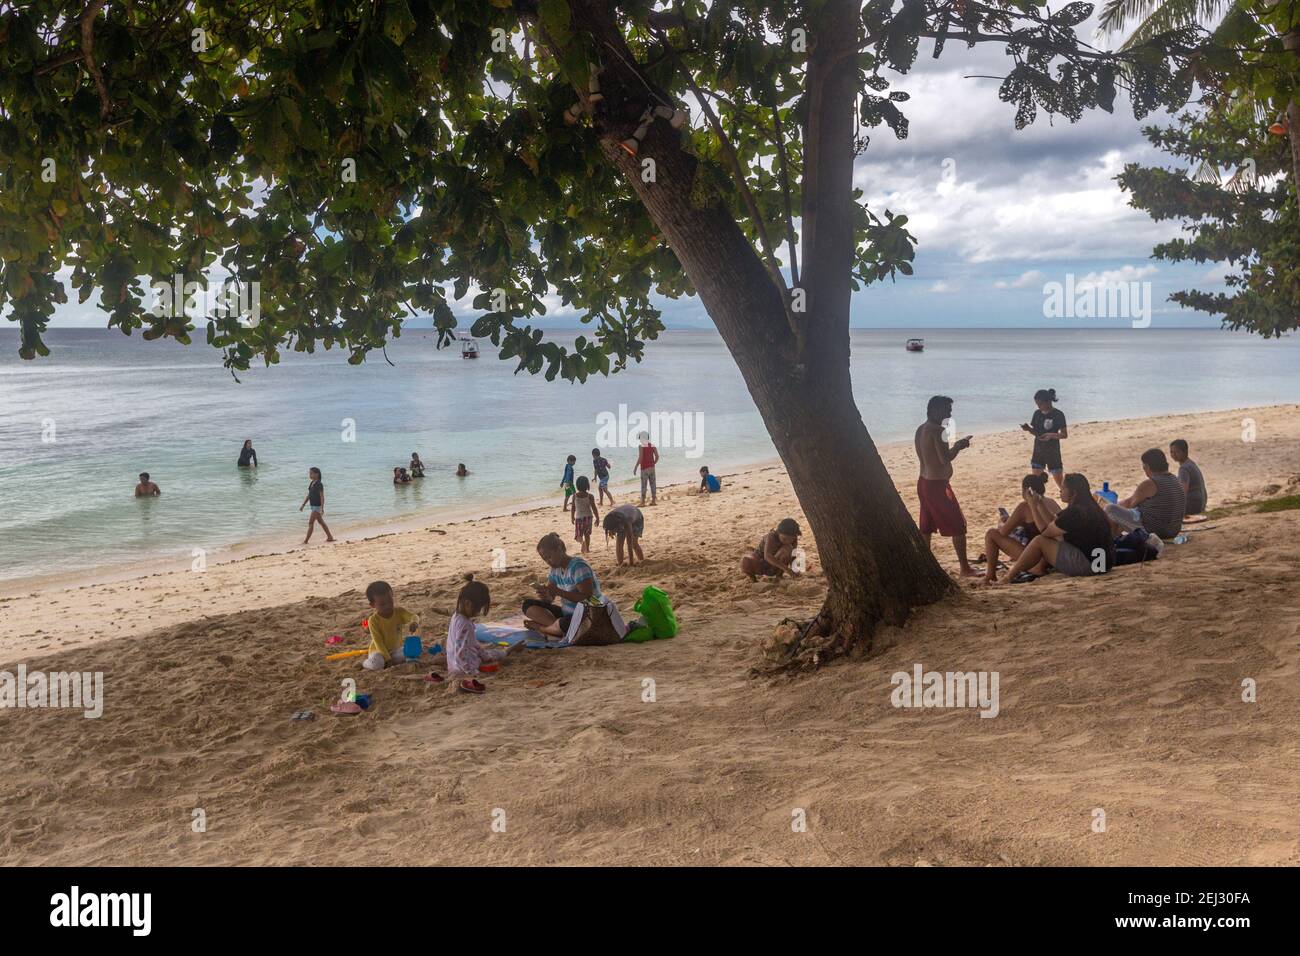 Amazing paradise Alona beach with palms in Bohol Panglao island, Philippines Stock Photo